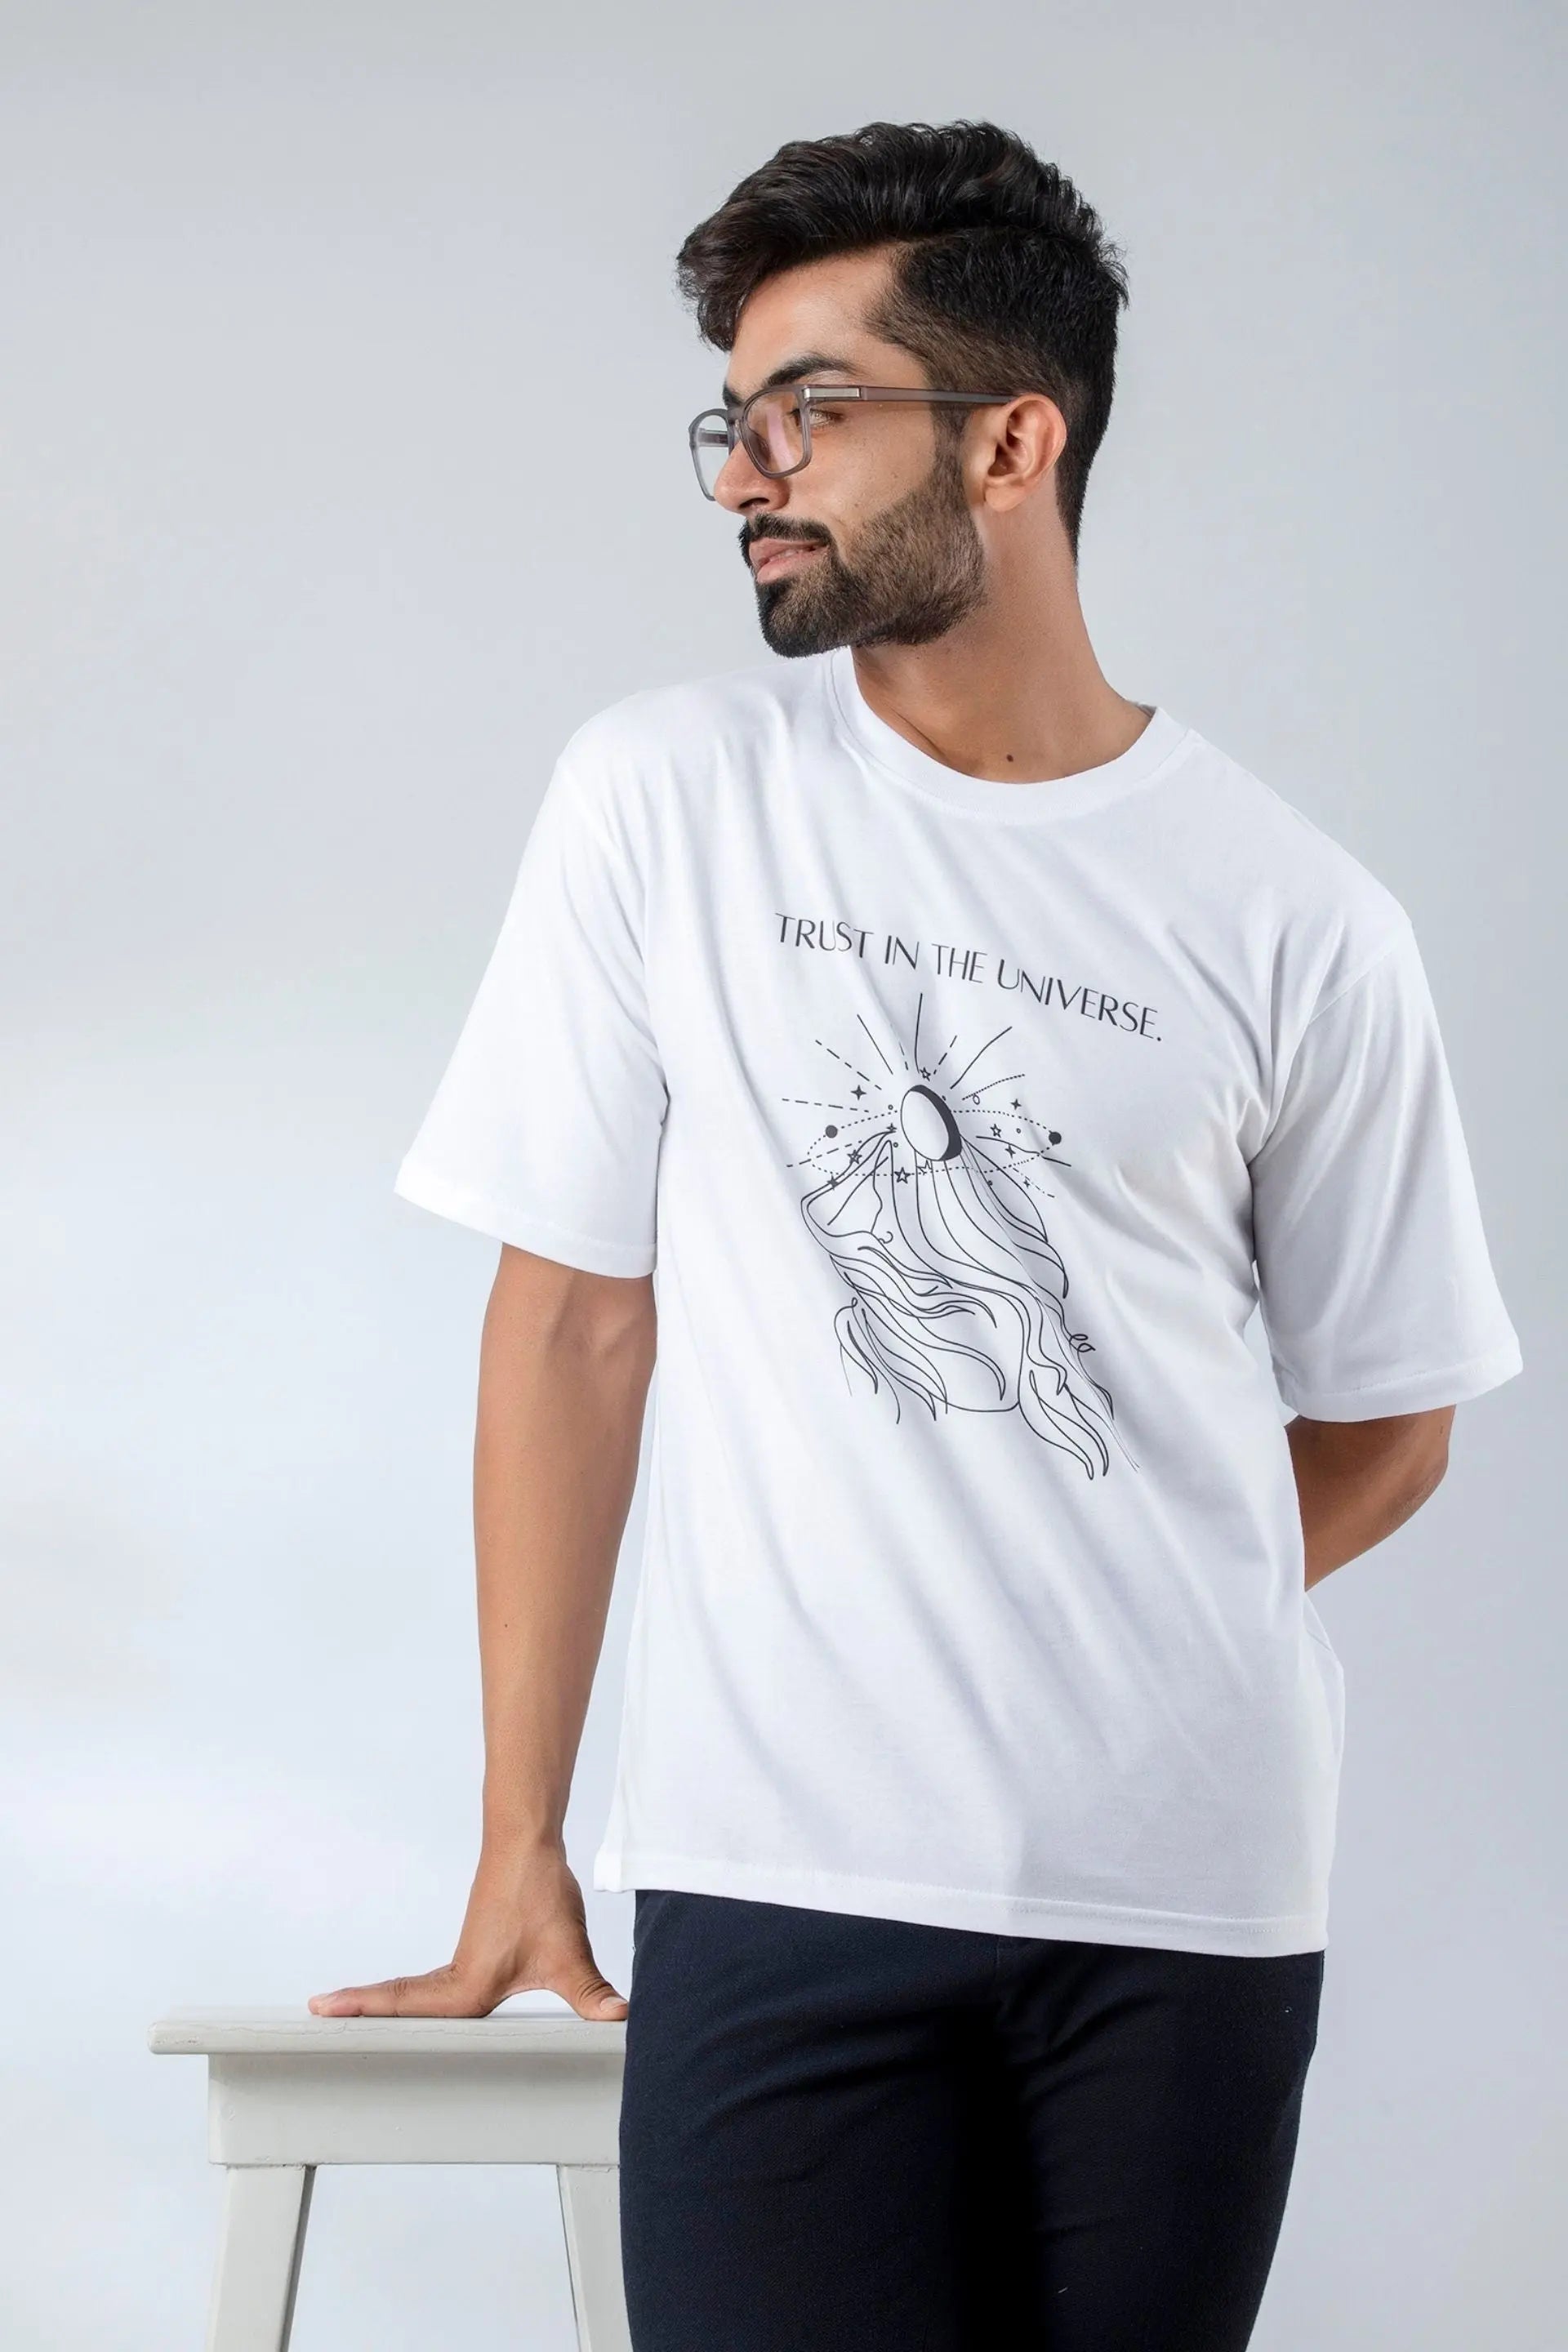 Firangi Yarn Oversize/Baggy Tshirt in White With Manifestation Print